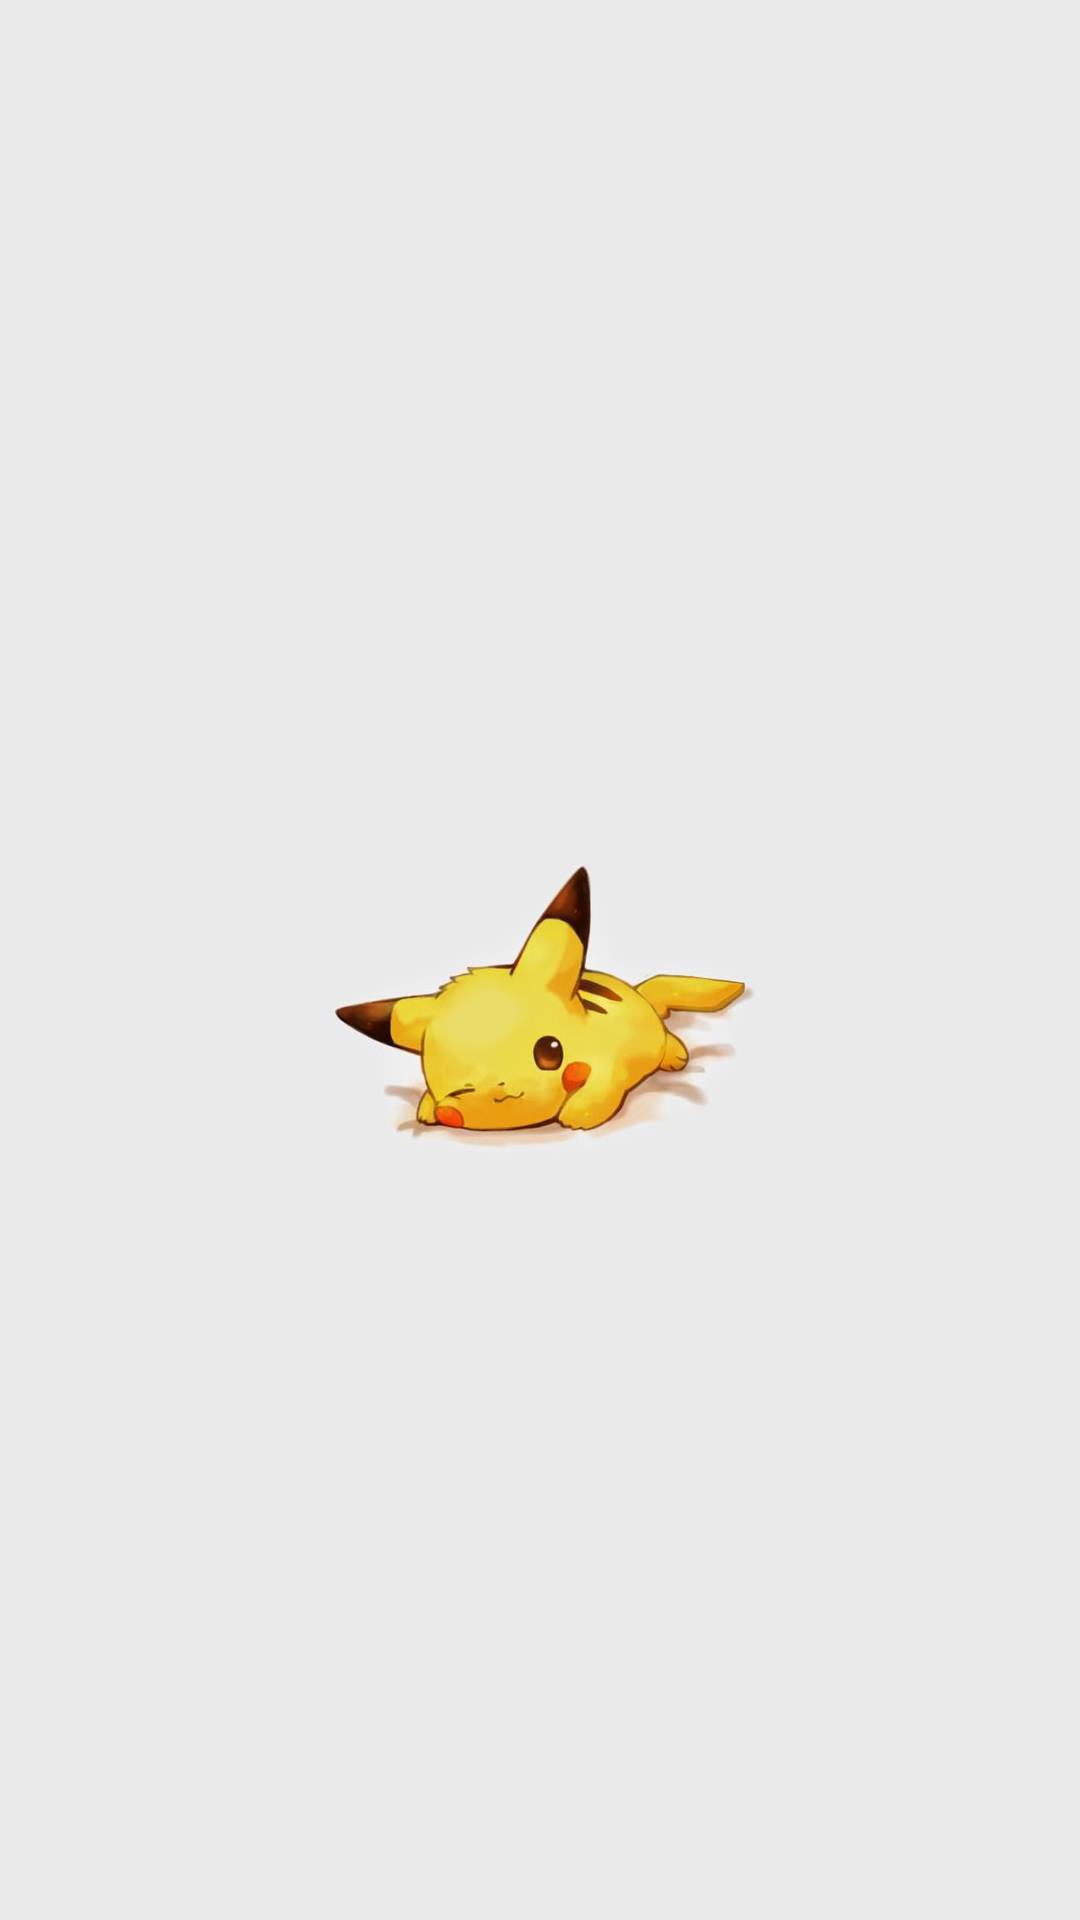 Cute Pokemon Mobile Wallpaper